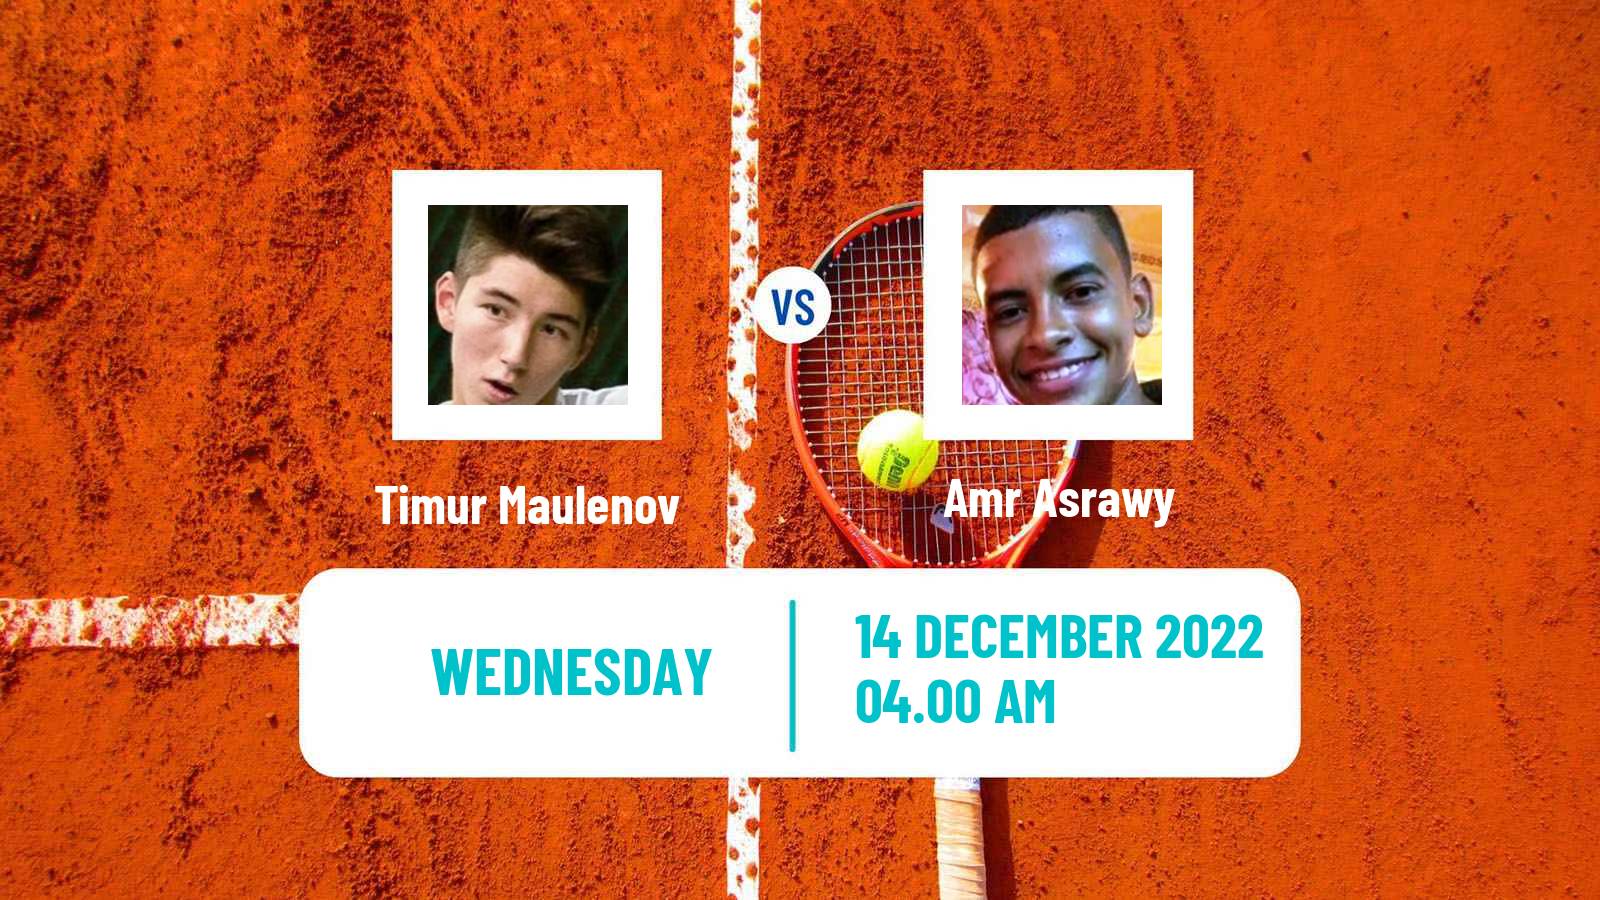 Tennis ITF Tournaments Timur Maulenov - Amr Asrawy